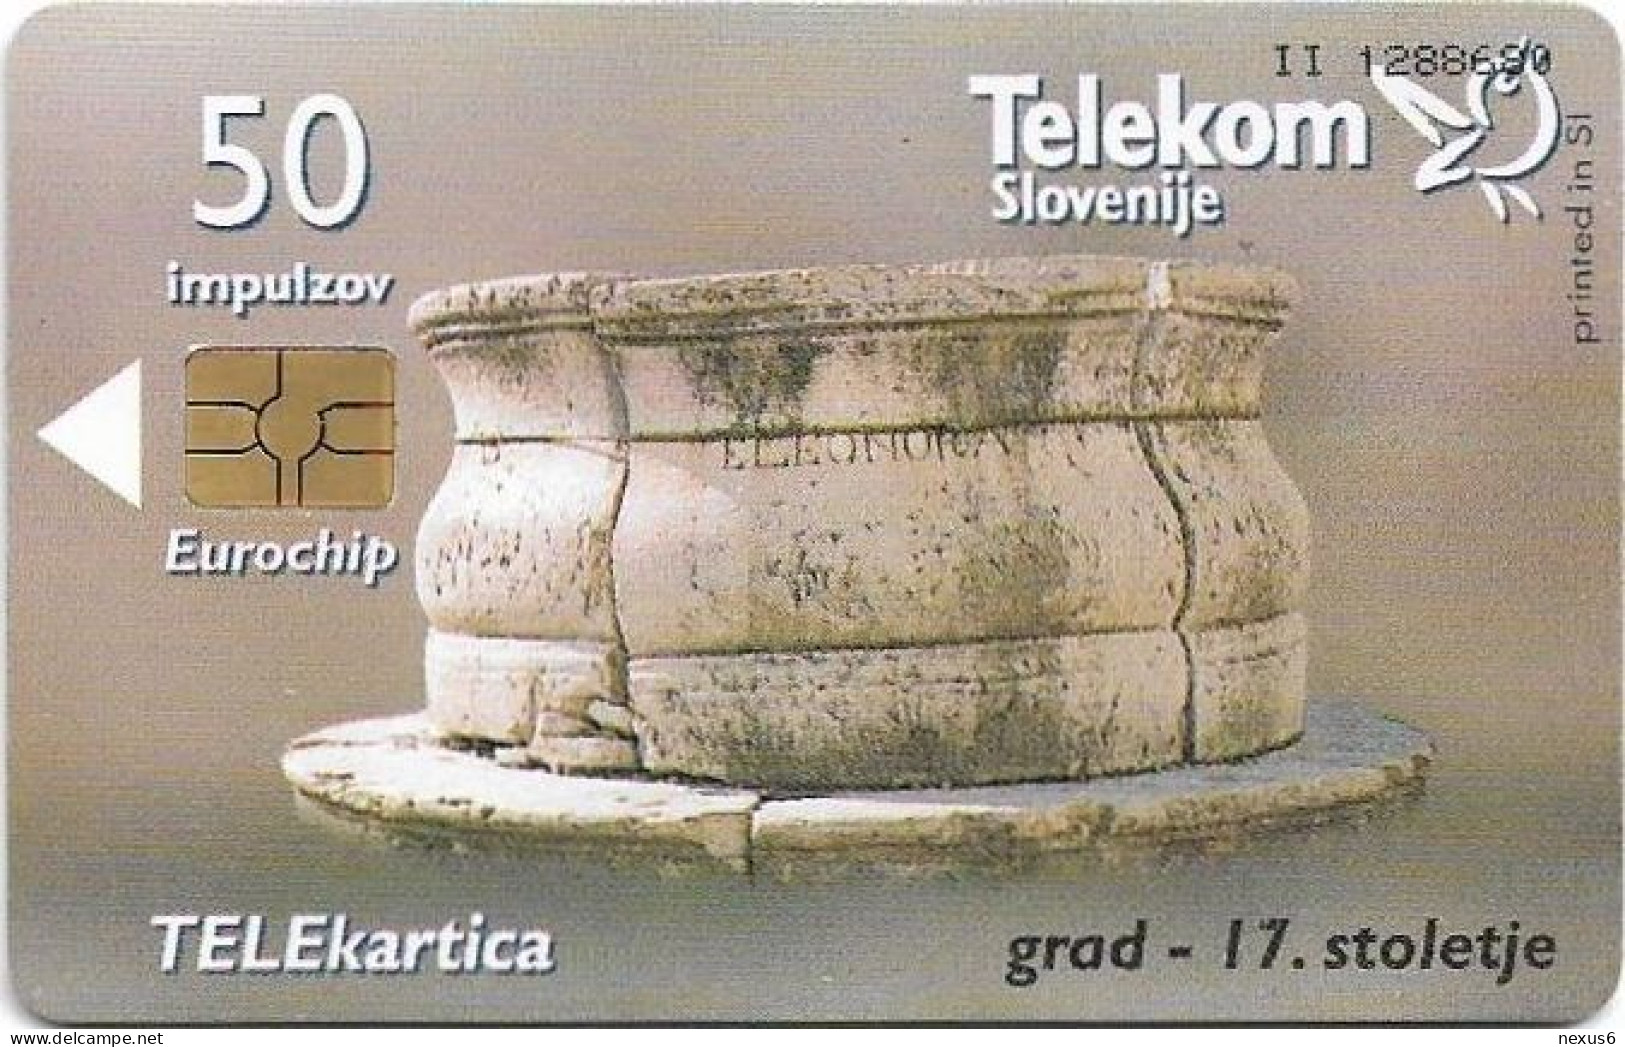 Slovenia - Telekom Slovenije - Water Well - Grad 17. Stoletje, Gem5 Red, 01.2001, 50Units, 9.960ex, Used - Slowenien